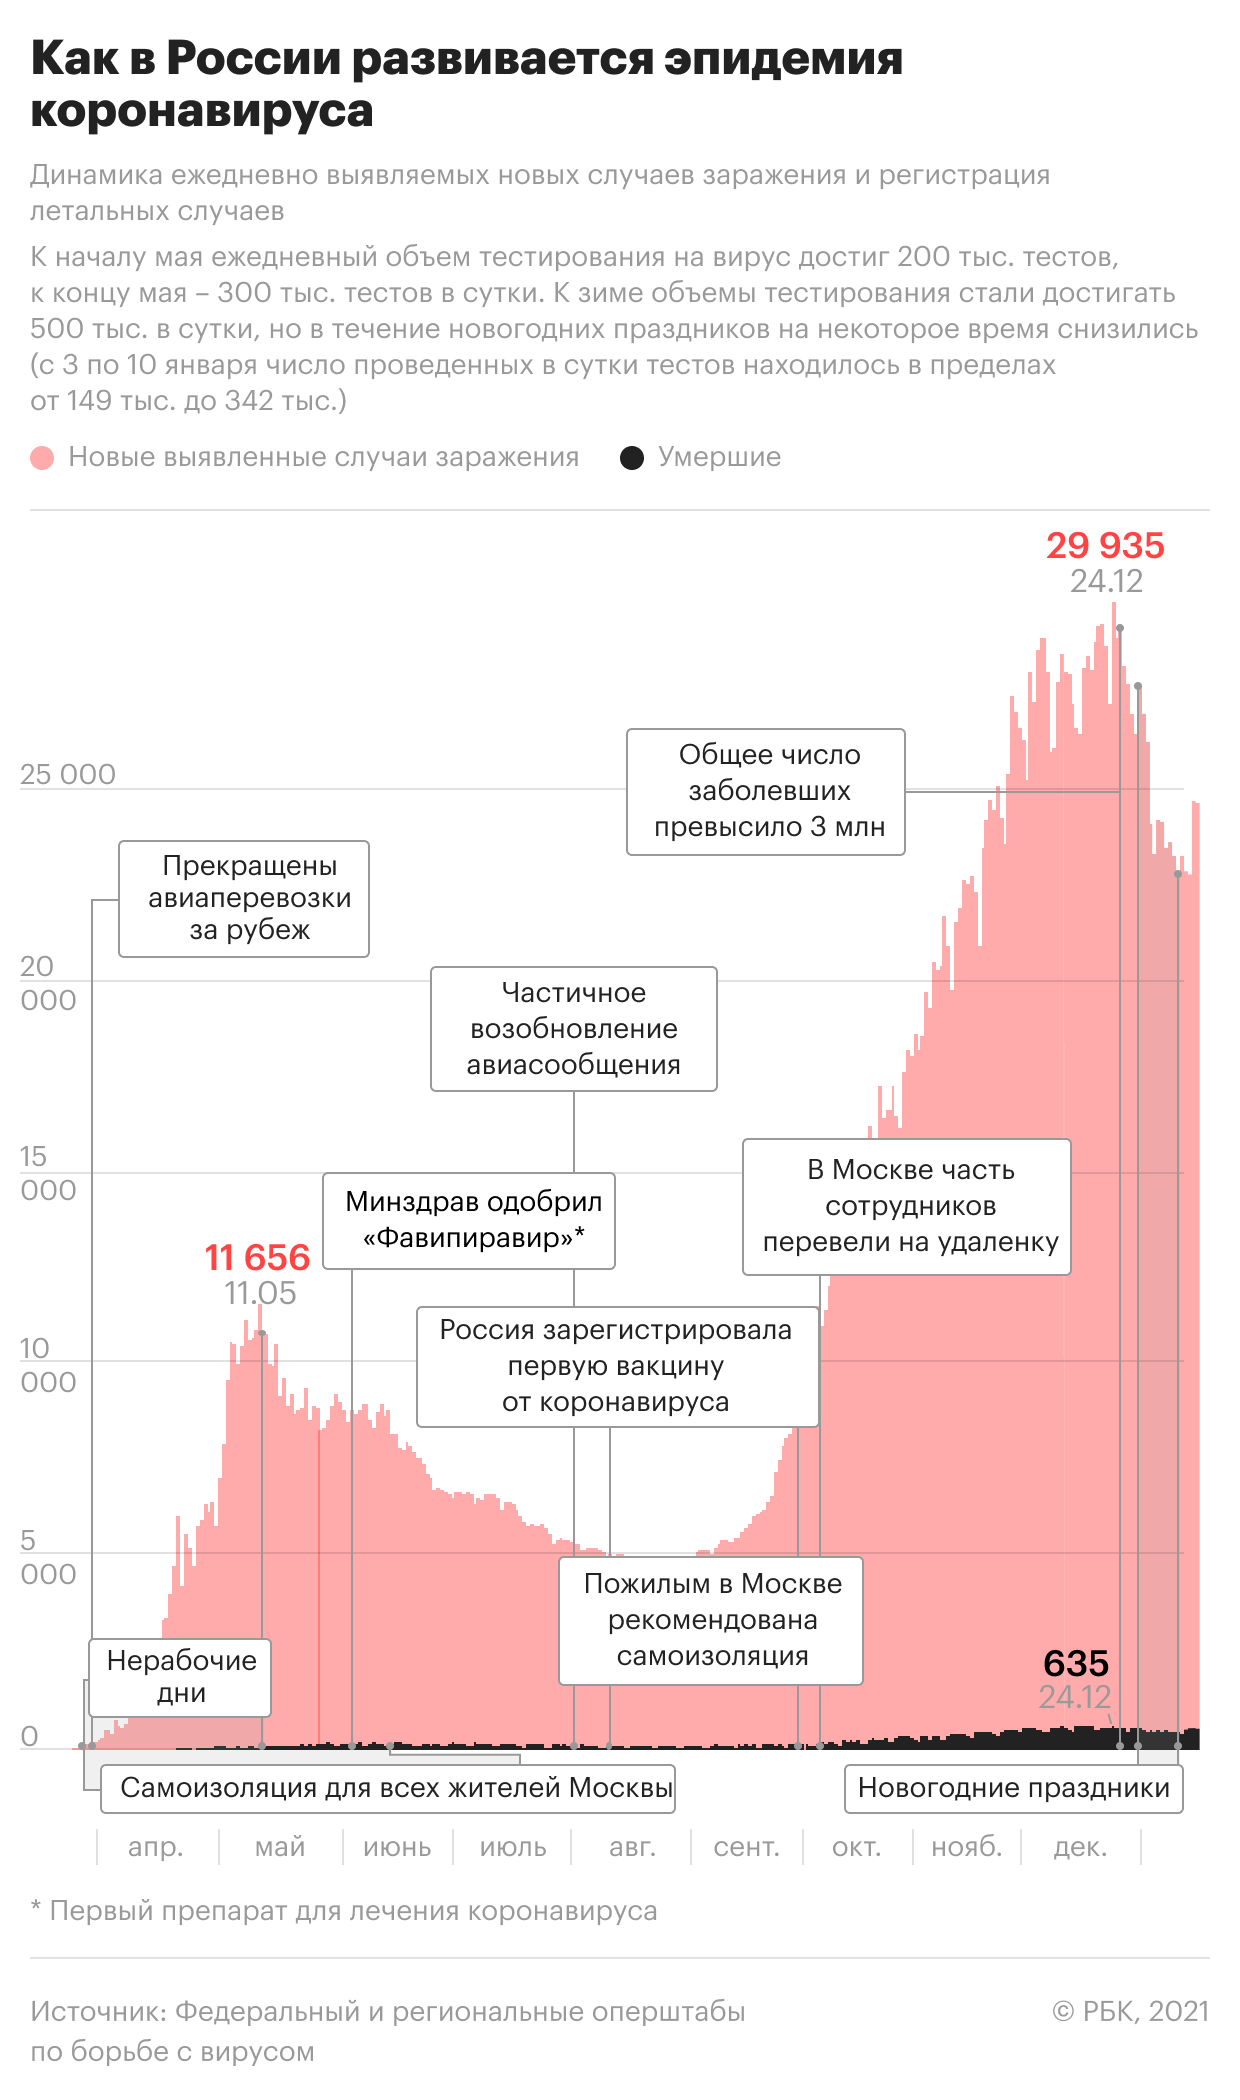 Онищенко спрогнозировал спад заболеваемости COVID-19 к концу года